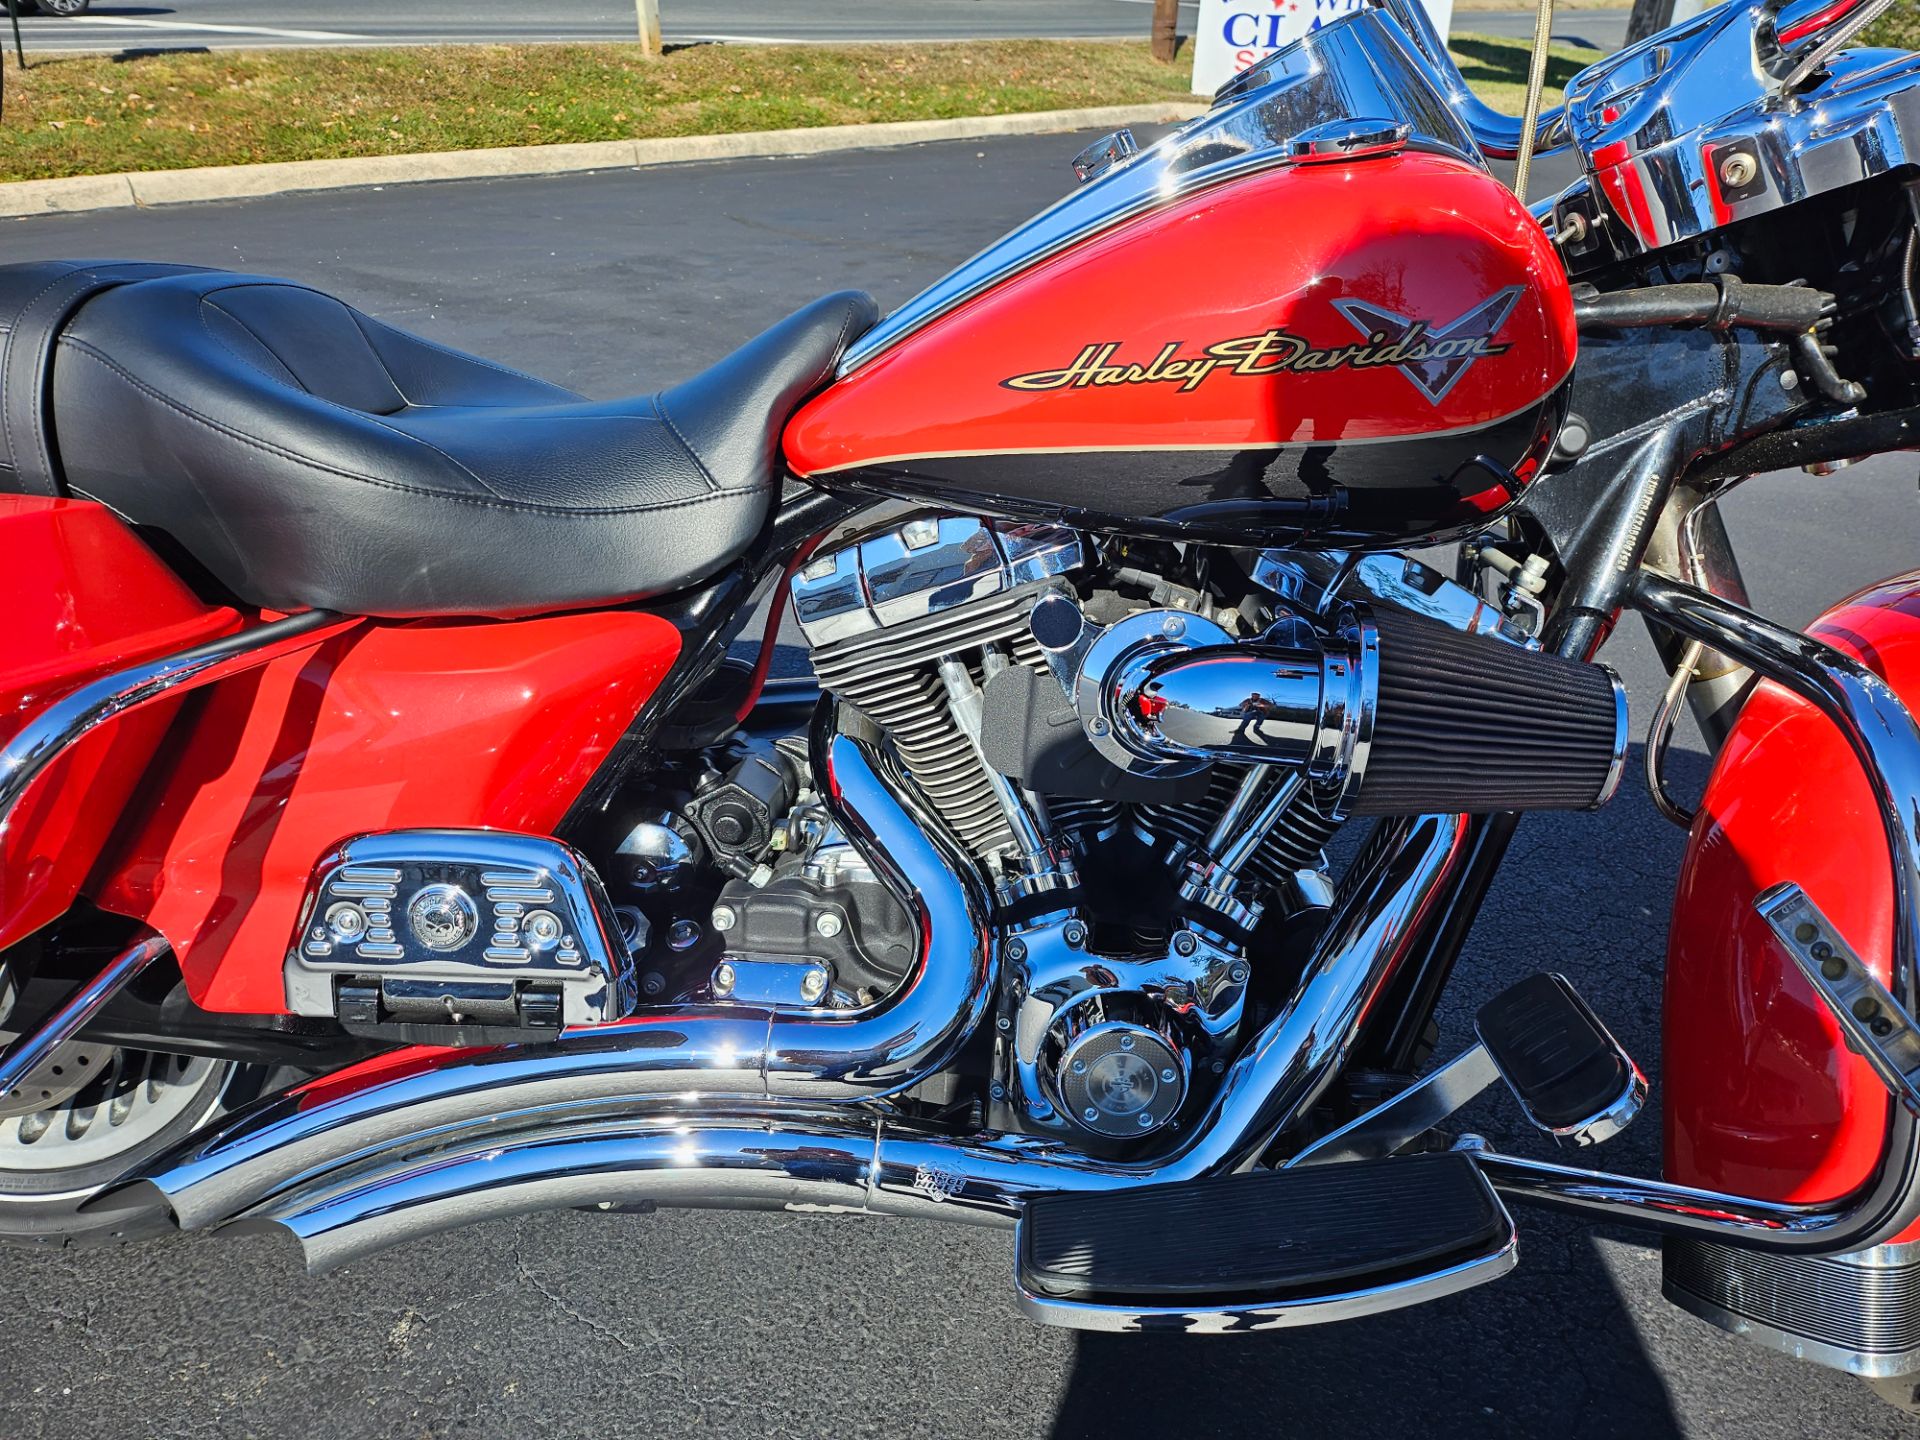 2010 Harley-Davidson Road King® in Lynchburg, Virginia - Photo 25